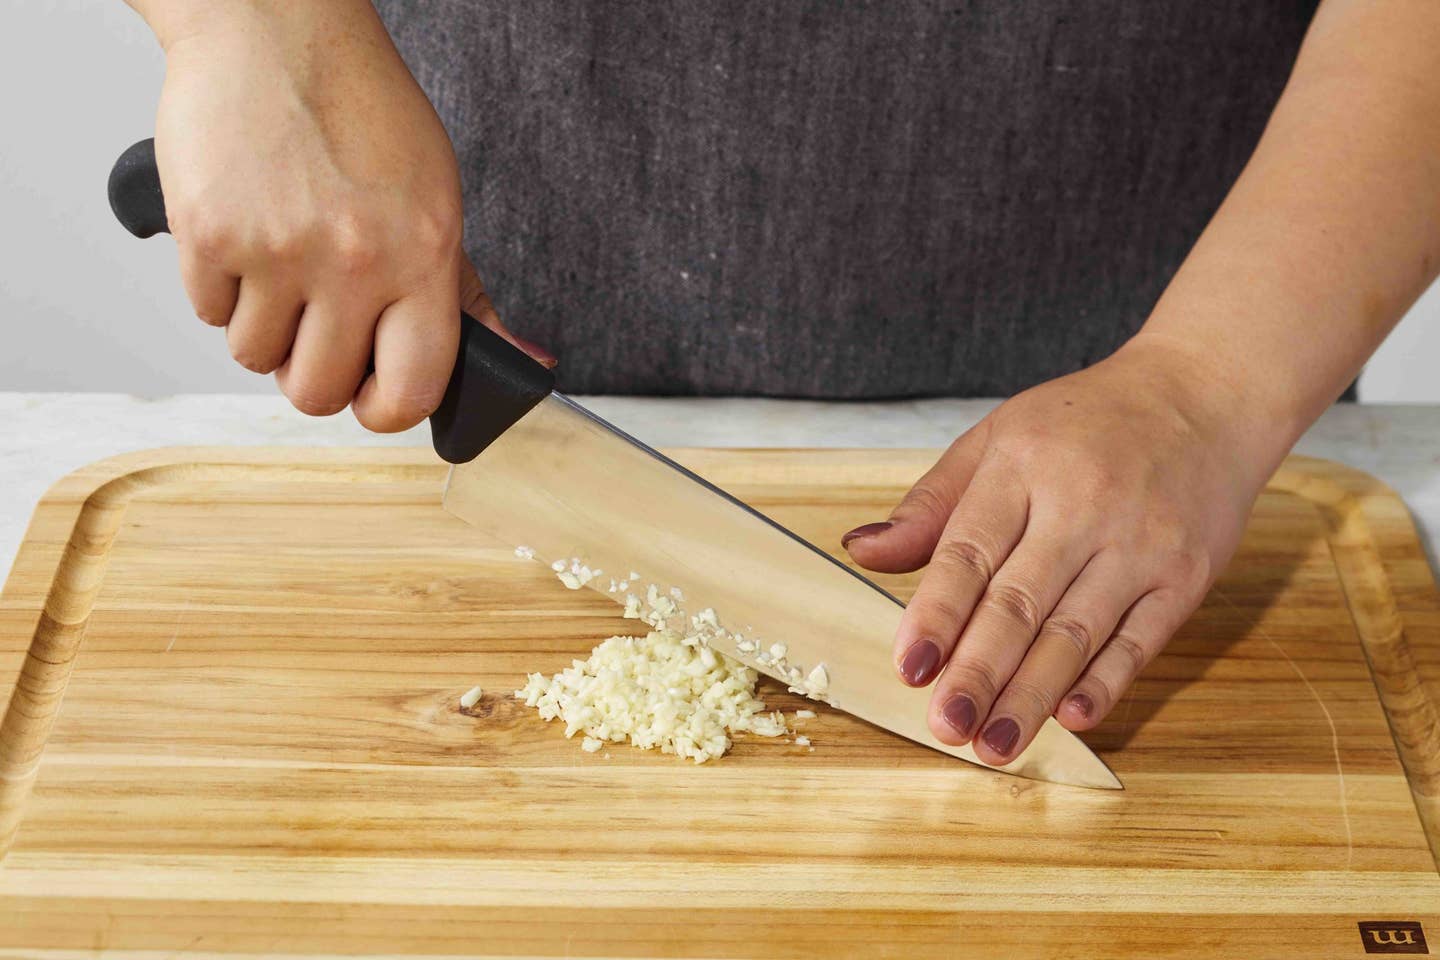 How to Learn Basic Knife Skills